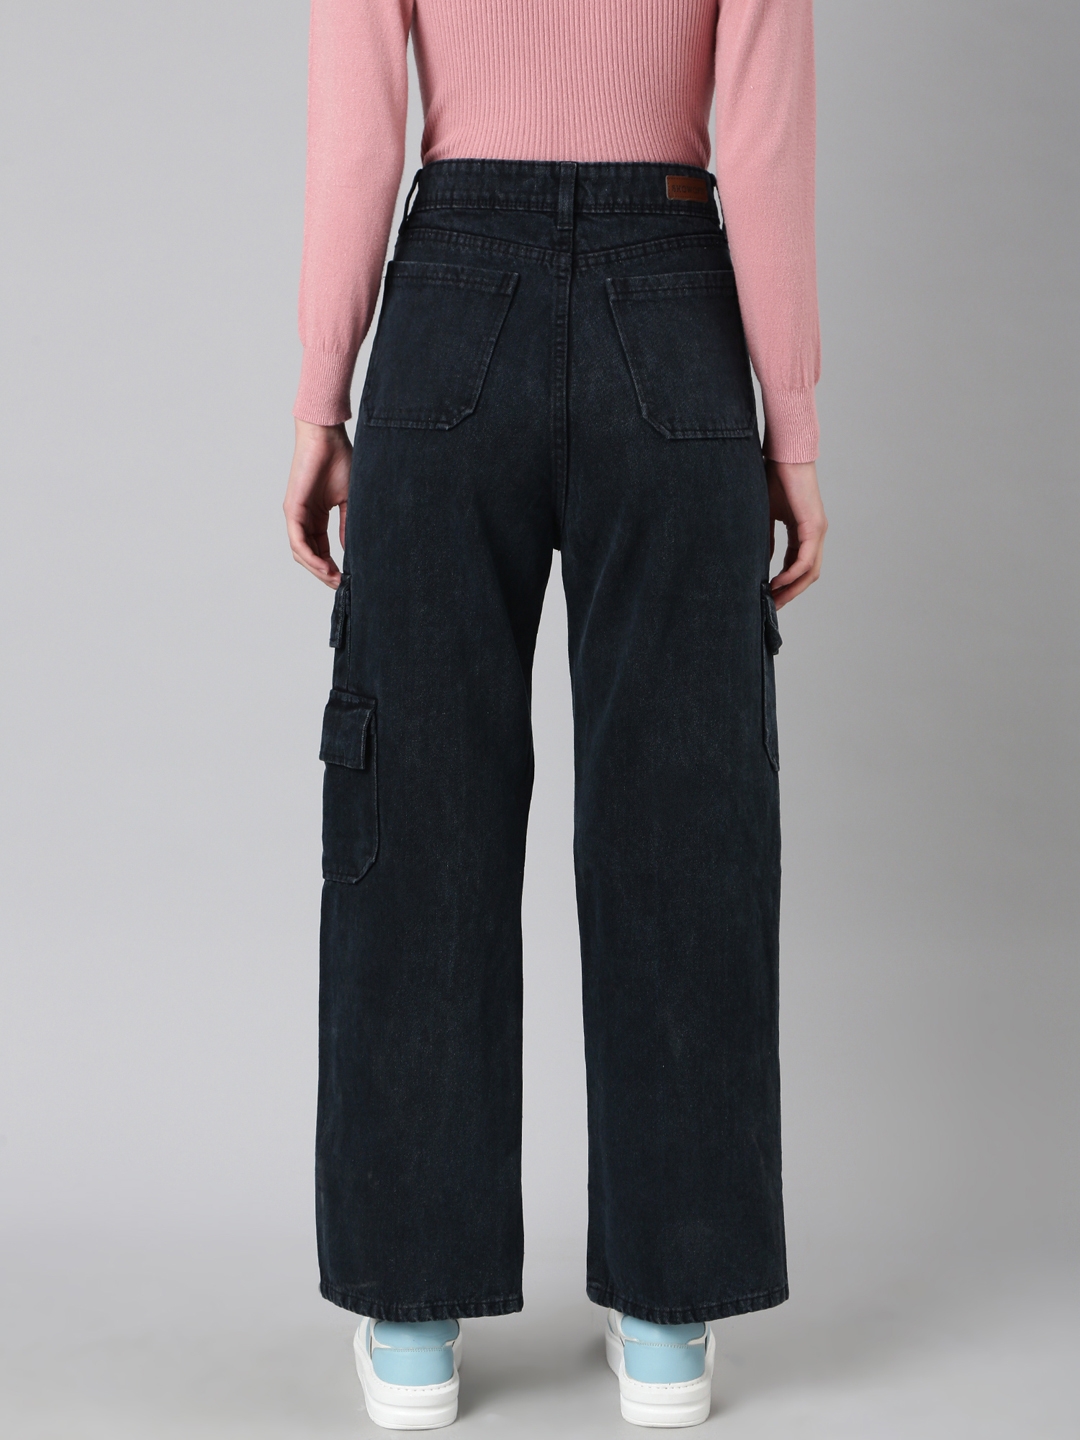 Buy SHOWOFF Women Clean Look Mid-Rise Blue Denim Cargo Jeans online